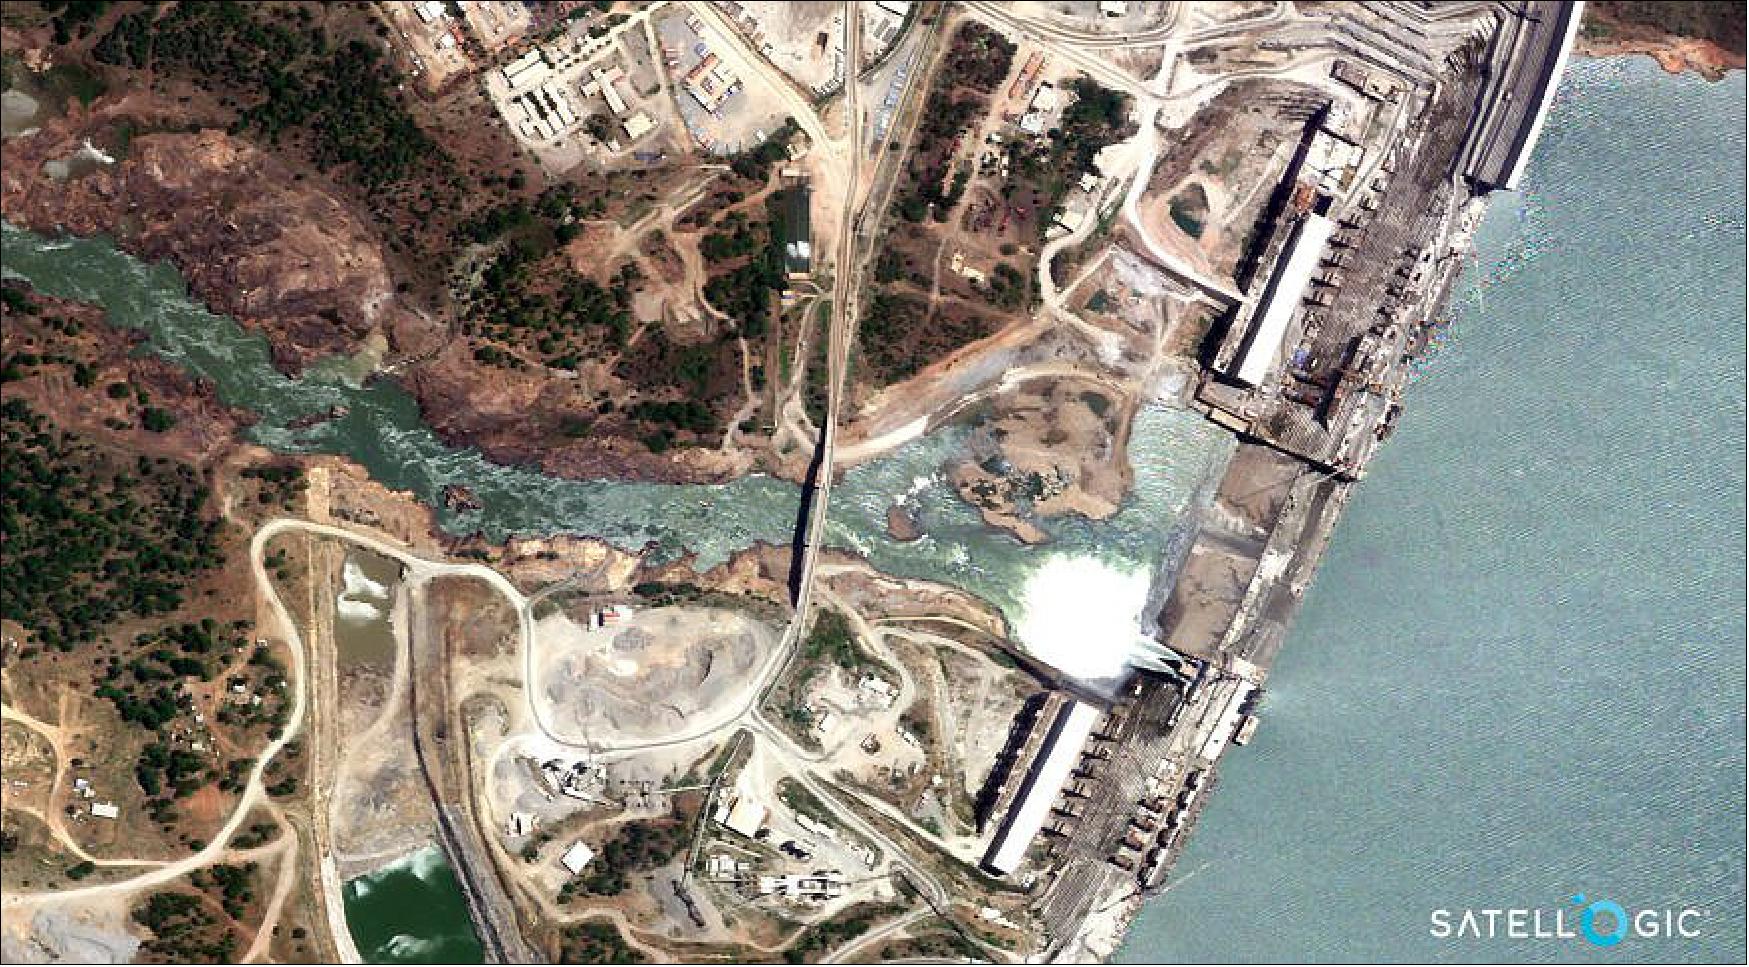 Figure 8: Satellite image of the Grand Ethiopian Renaissance Dam (image credit: Satellogic)